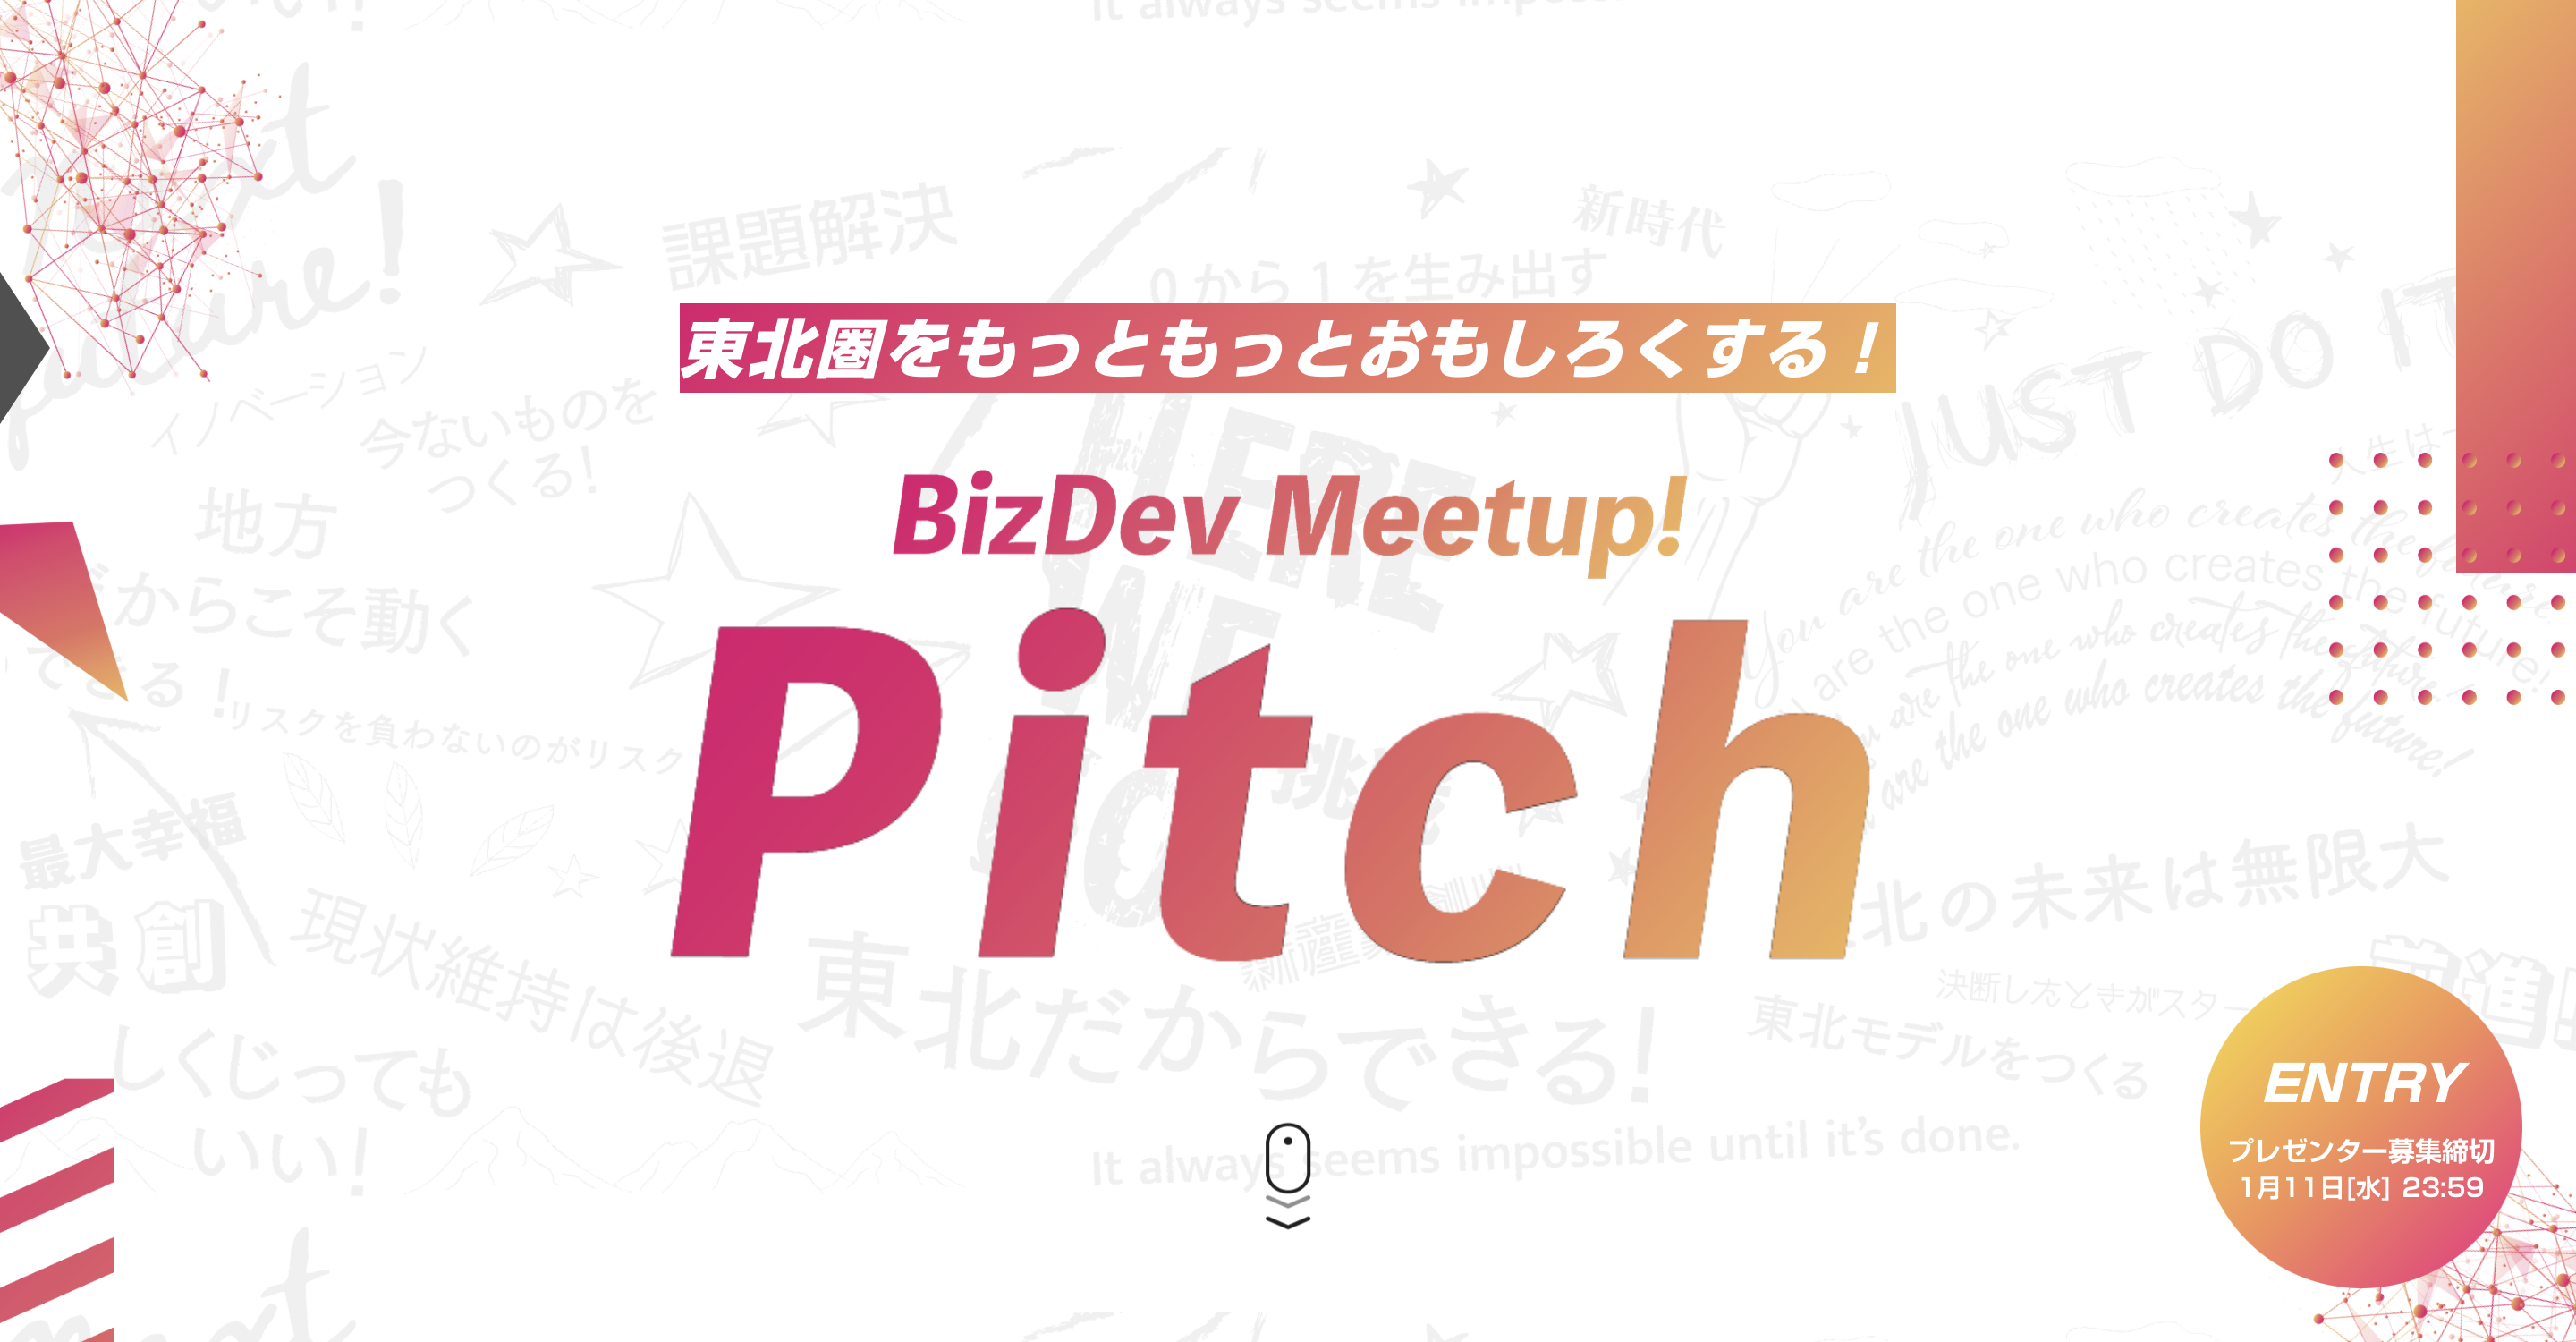 BizDev Meetup! Pitch